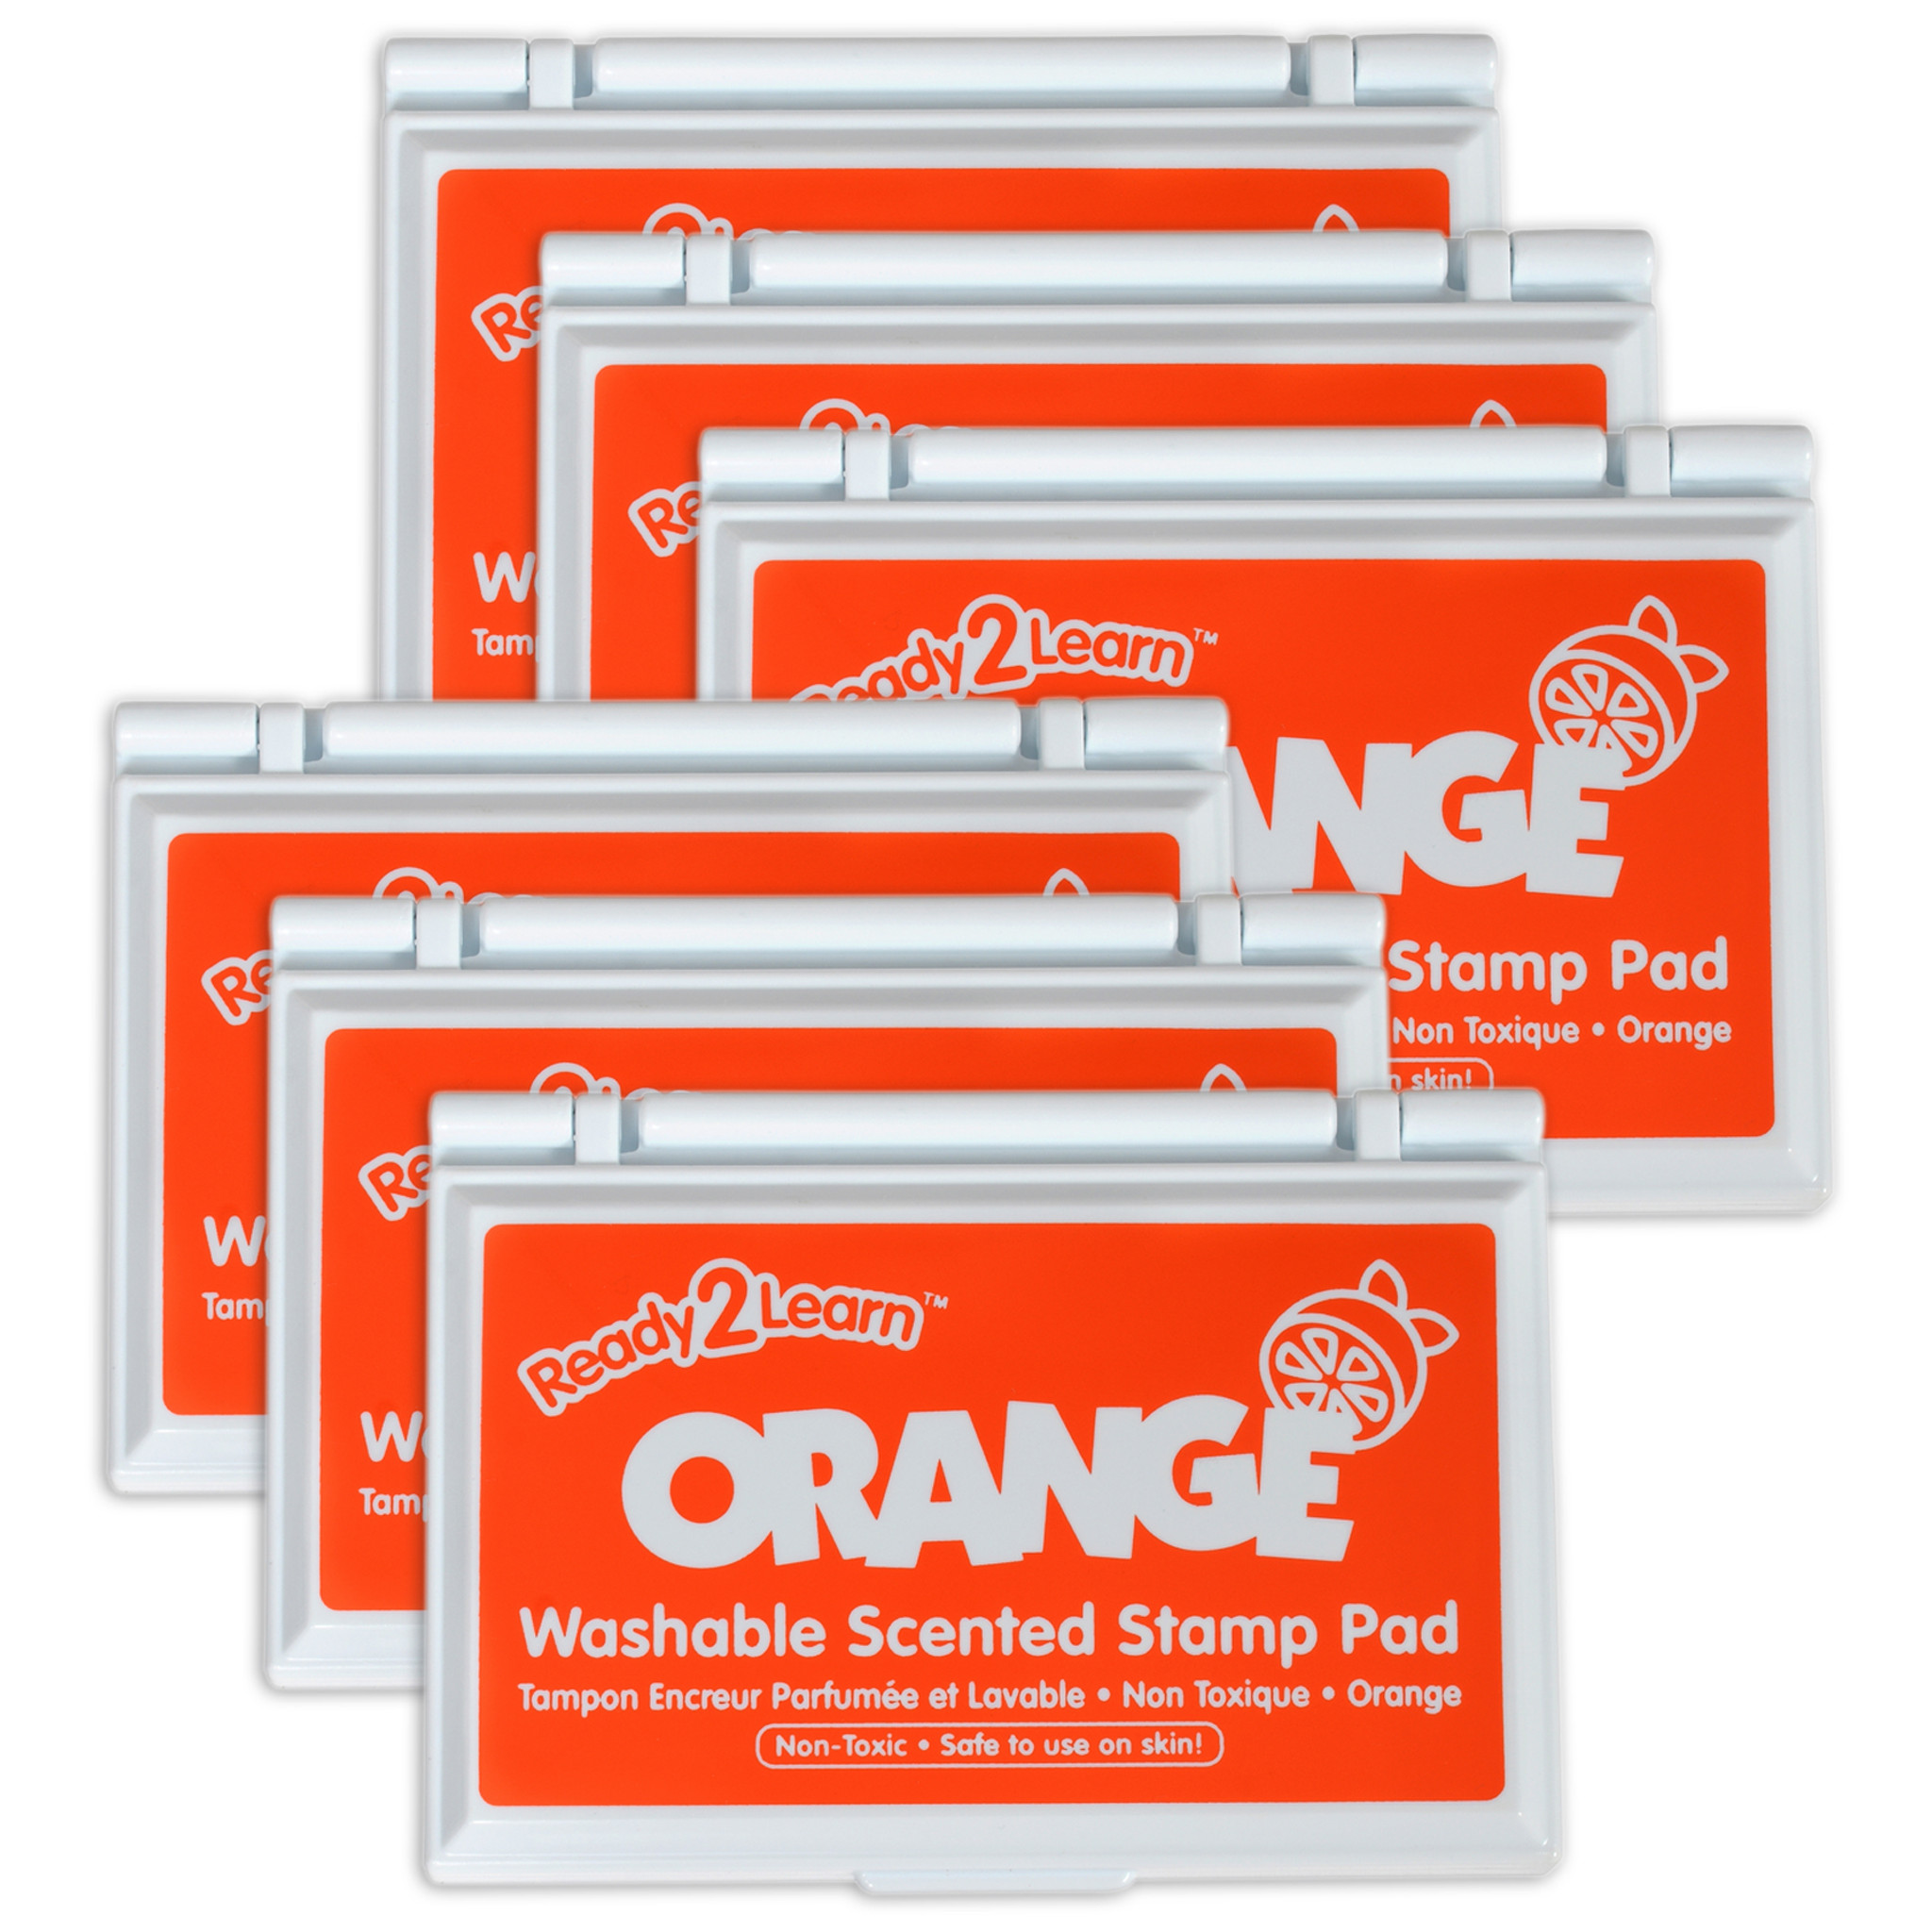 Ready2Learn Jumbo Washable Stamp Pad,Pack of 6 - Orange